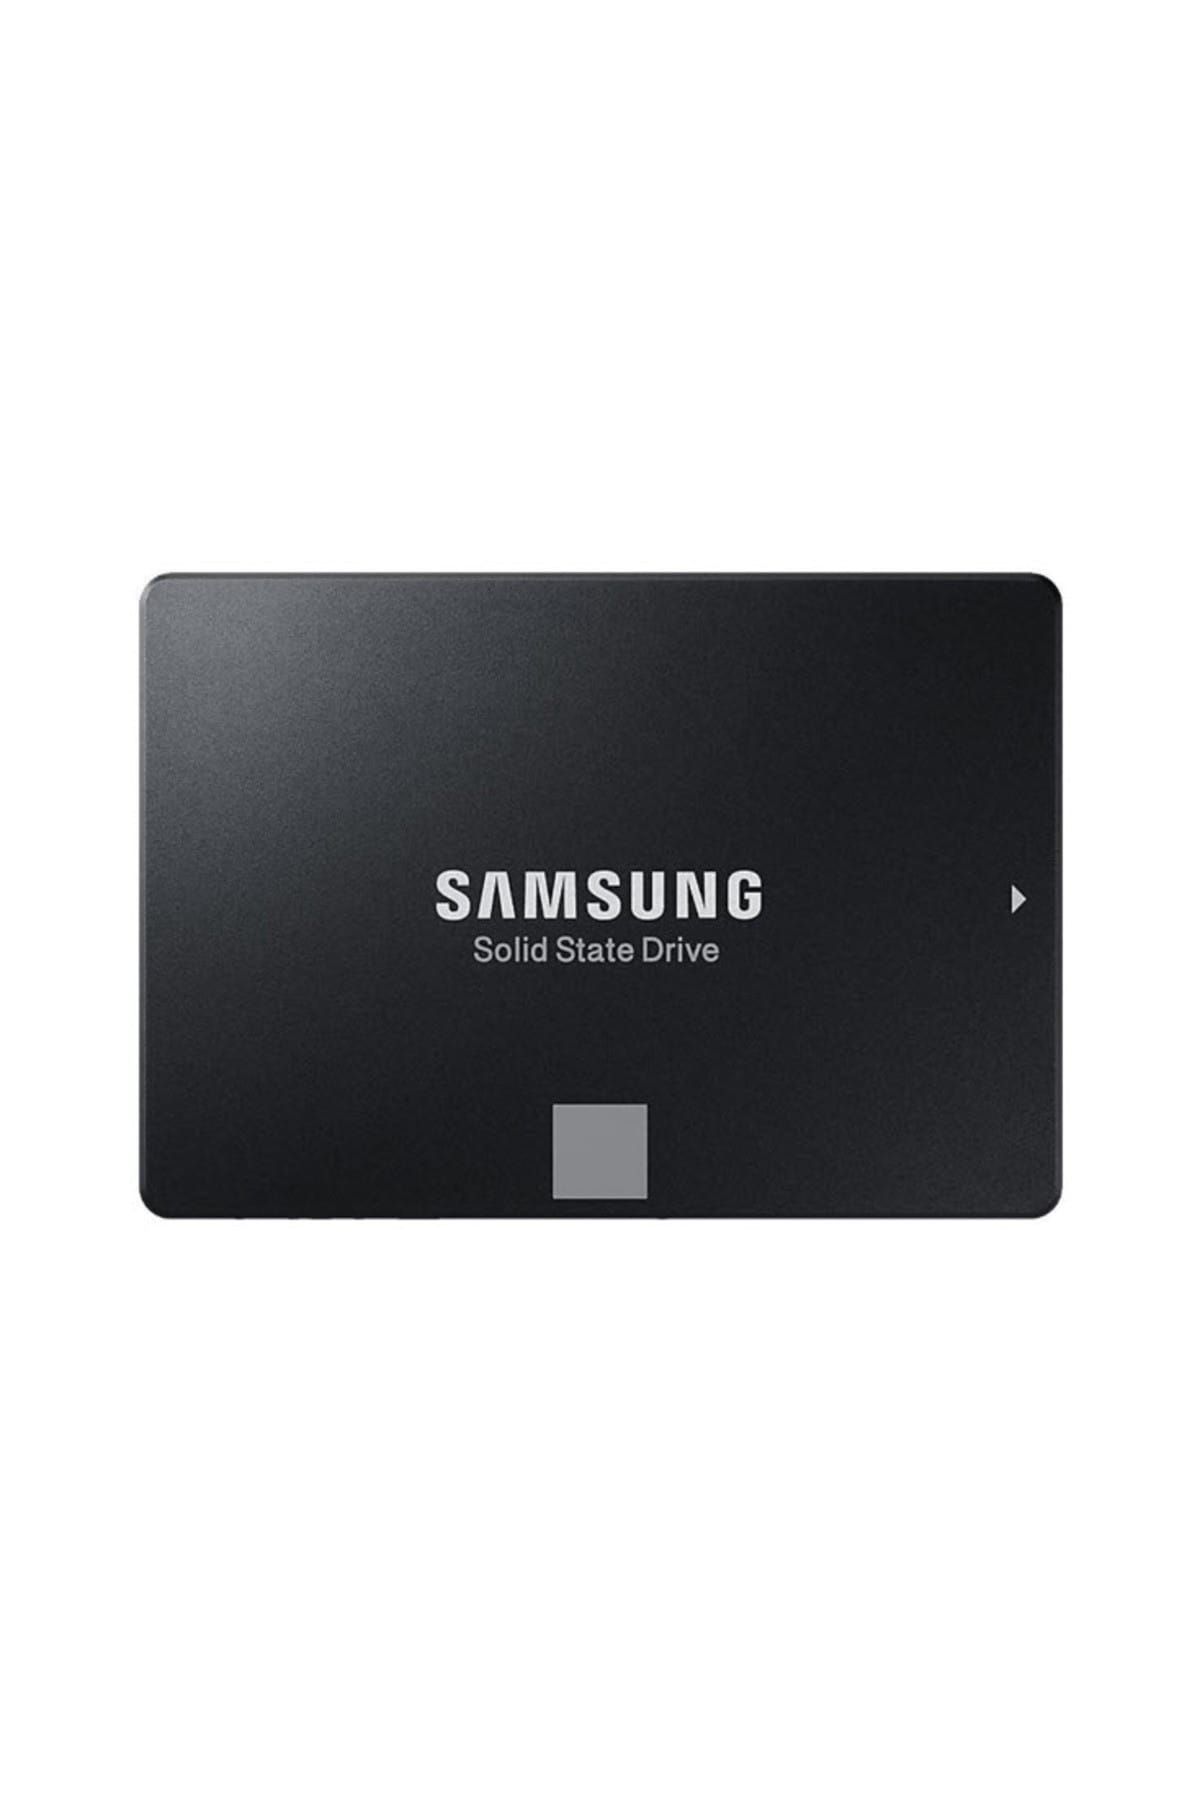 Samsung 860 Evo 250GB 560MB-520MB/s Sata3 2.5" SSD (MZ-76E250BW)